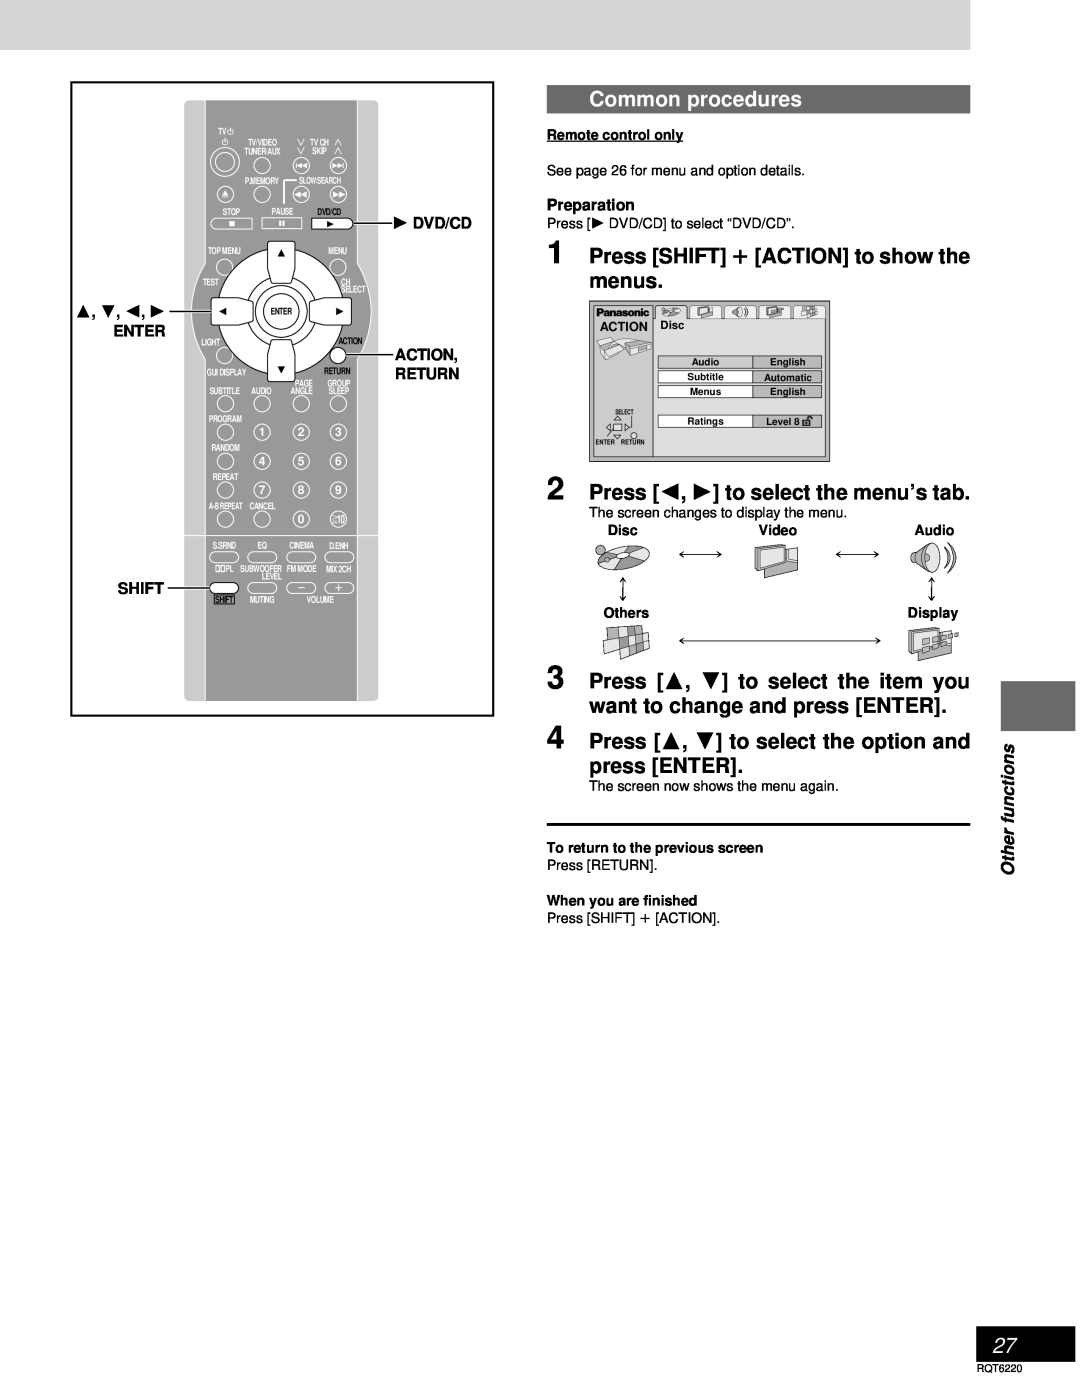 Panasonic SC-DM3 Press SHIFT i ACTION to show the menus, Press 2, 1 to select the menu’s tab, Common procedures, 1 DVD/CD 